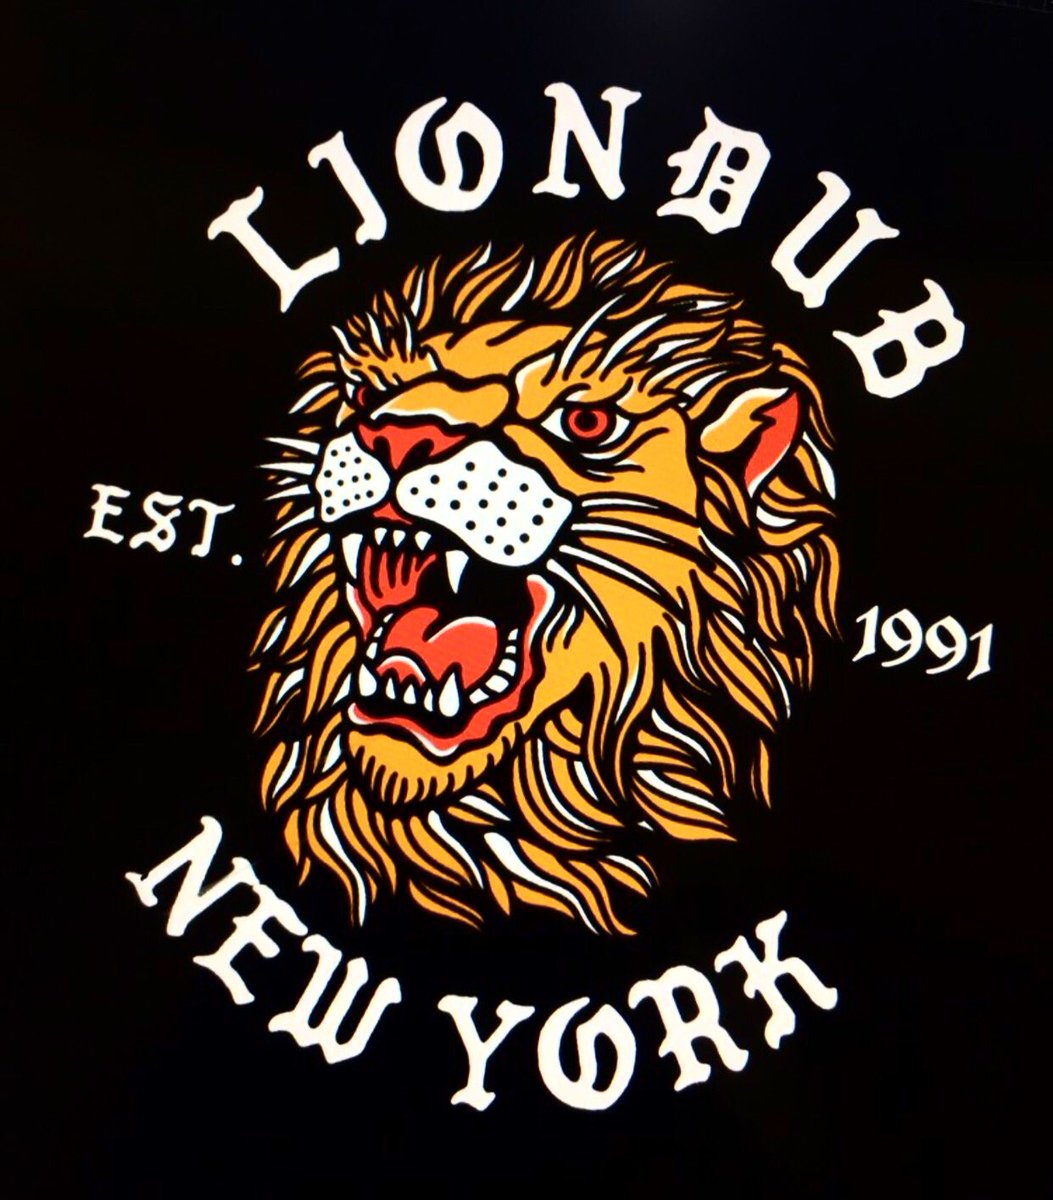 Ready up again! #liondub #nyc #nycdj 🔥